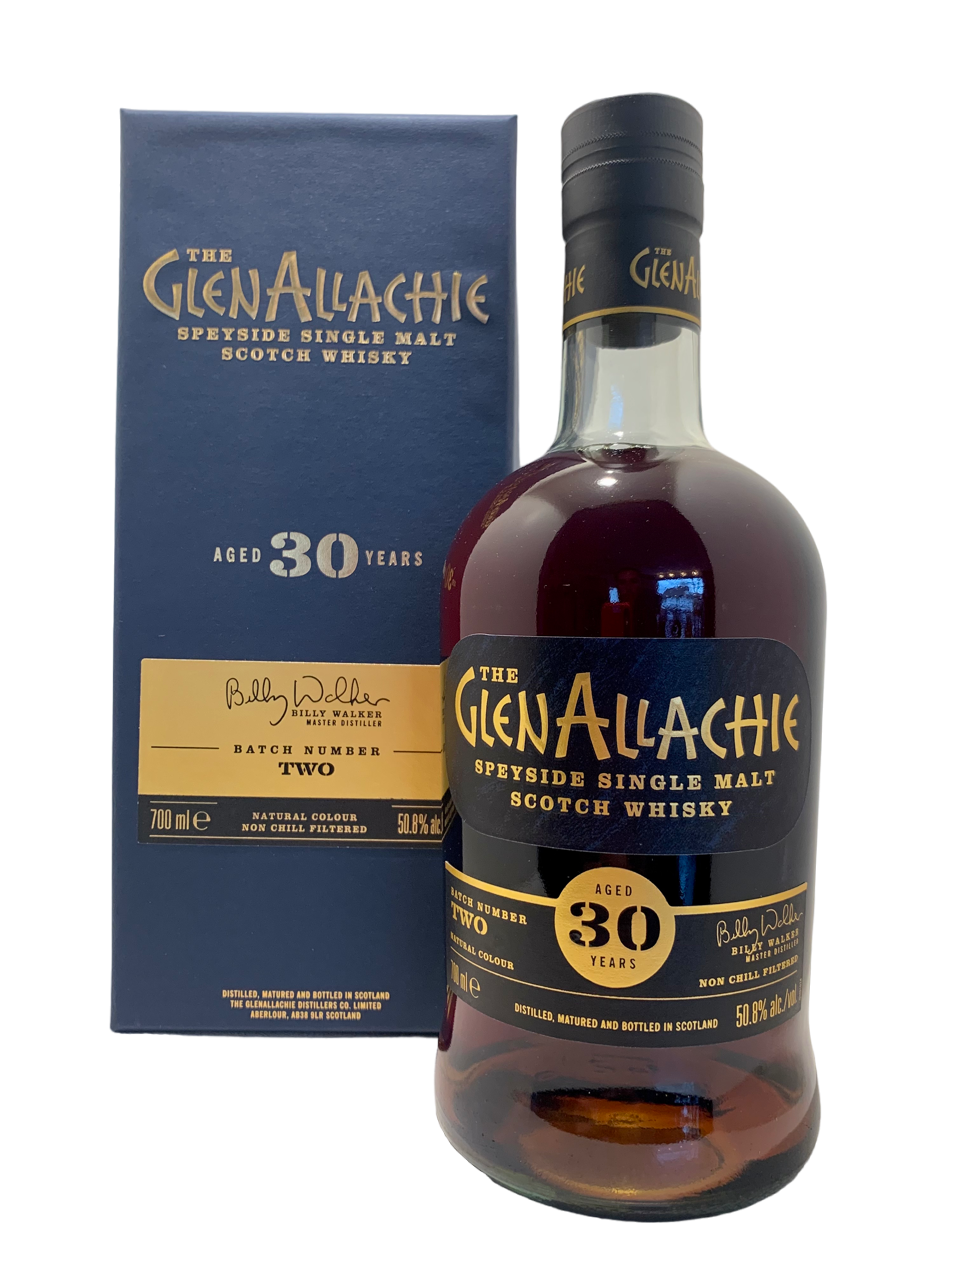 scotch whisky single malt écosse scotish spiritueux spirit speyside billy walker the glenallachie 30 years old cask strength batch 2